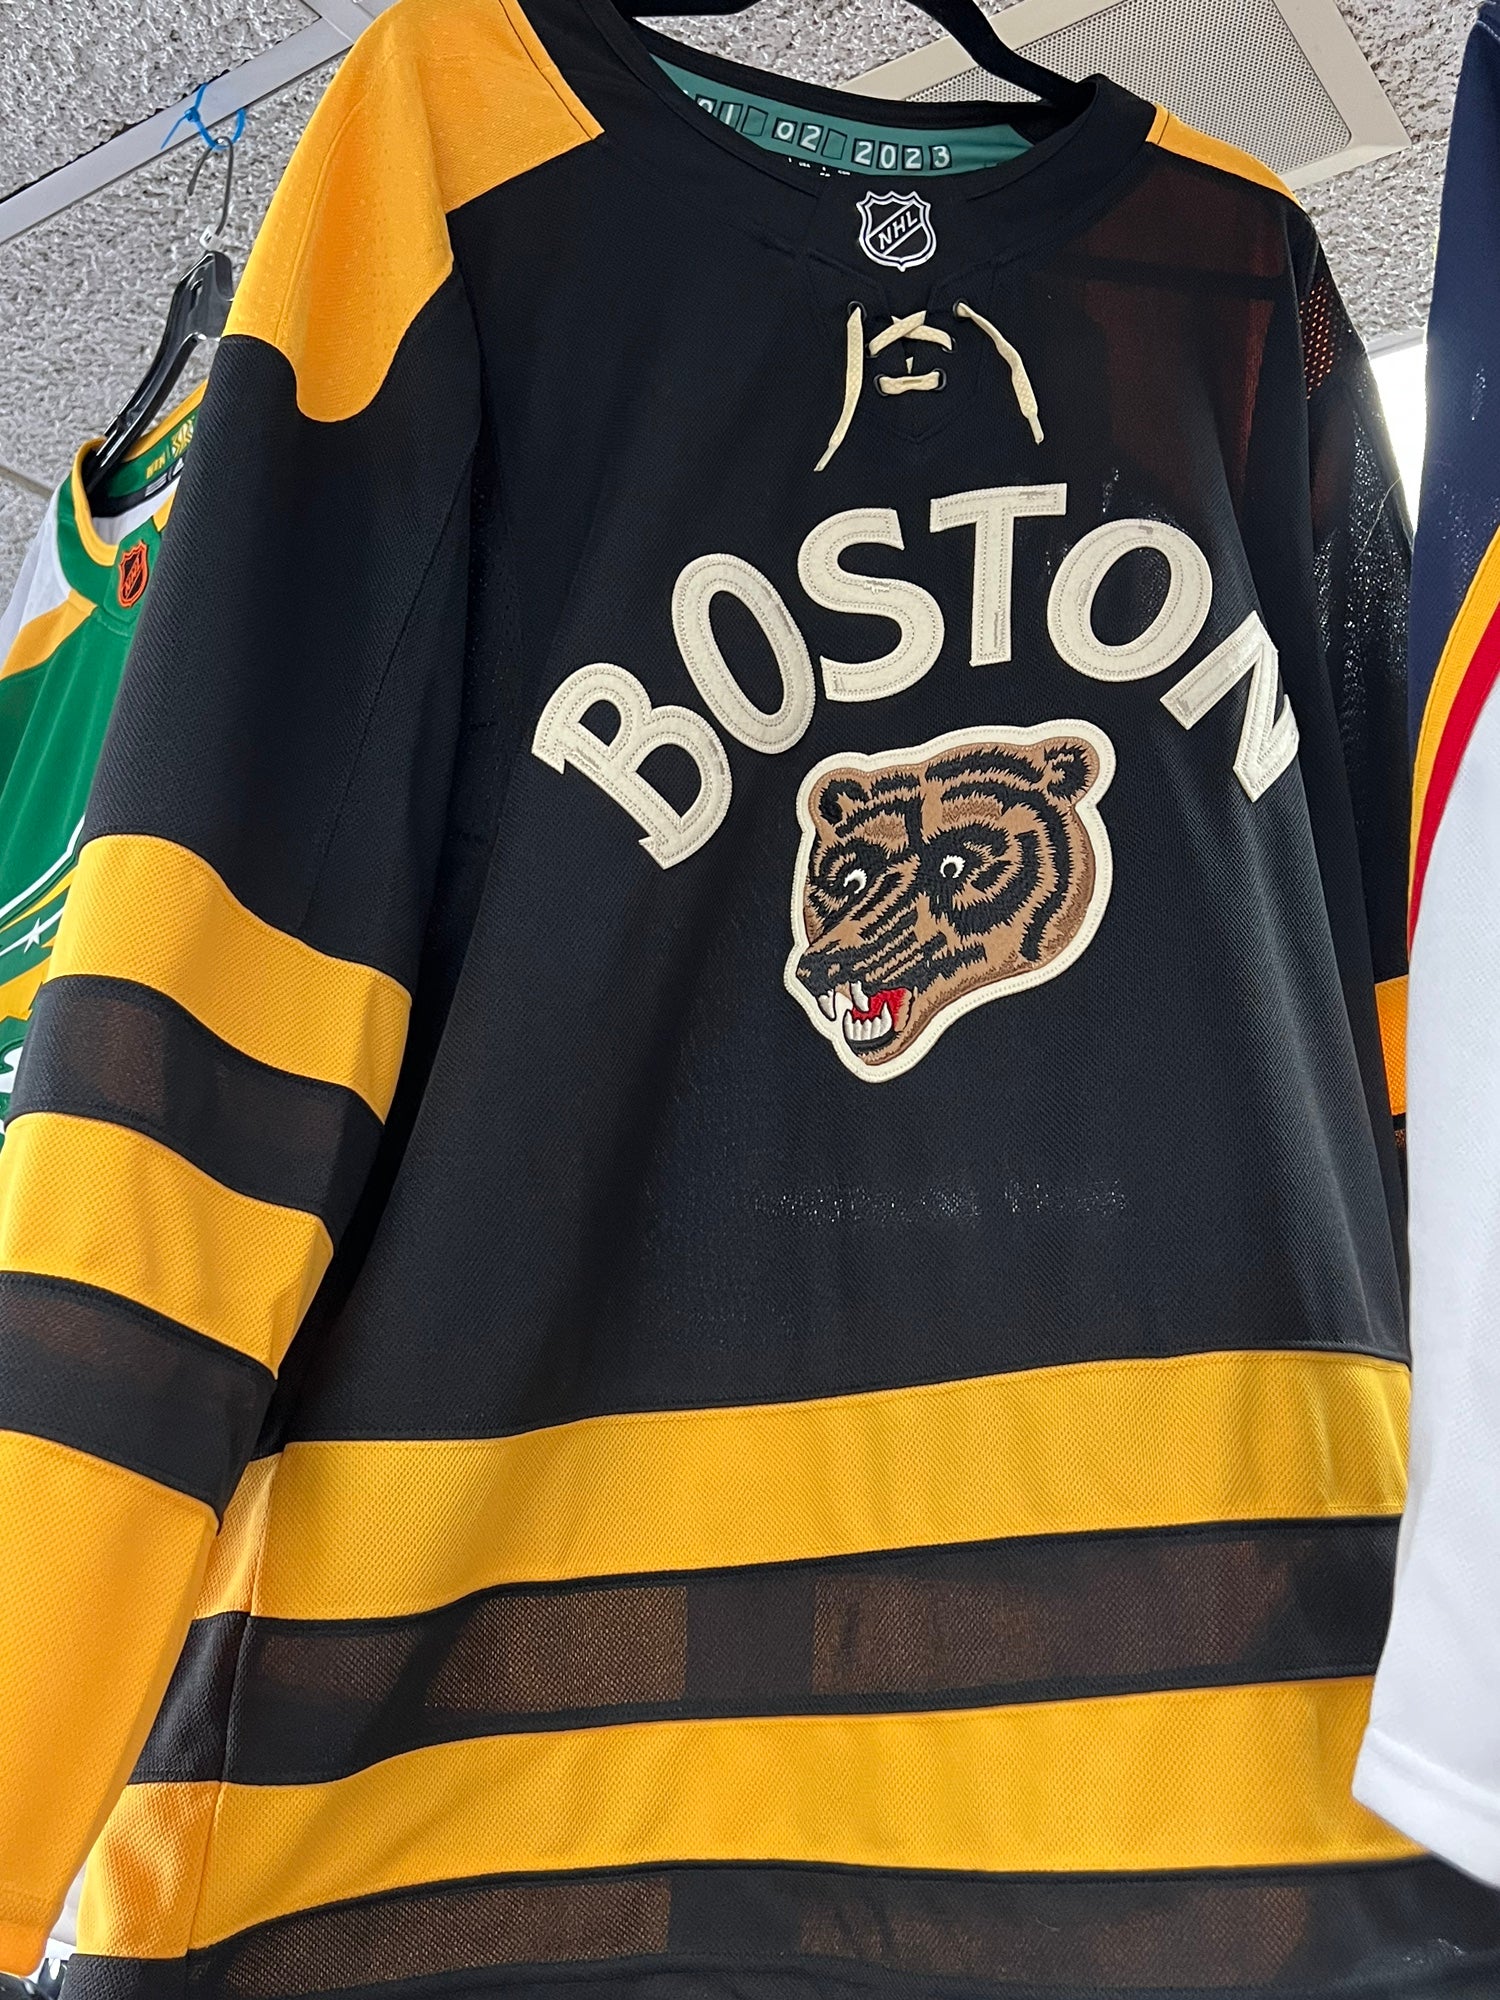 Adidas 2023 NHL Winter Classic Authentic Hockey Jersey - Boston Bruins -  Adult